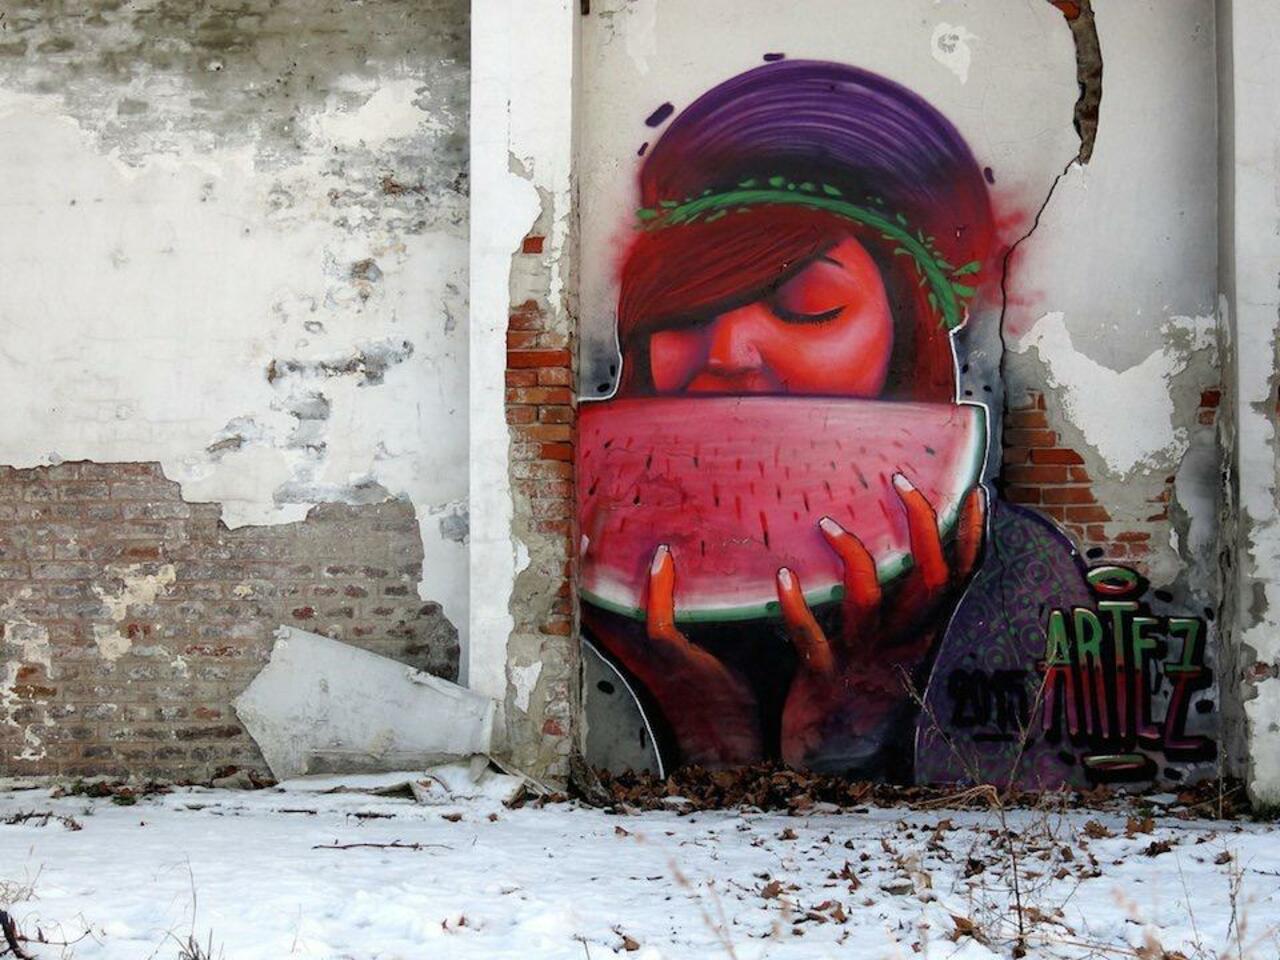 “@Pitchuskita: Artez 
Belgrade, Serbia
#streetart #art #graffiti #mural http://t.co/pyfI1QOdTK”